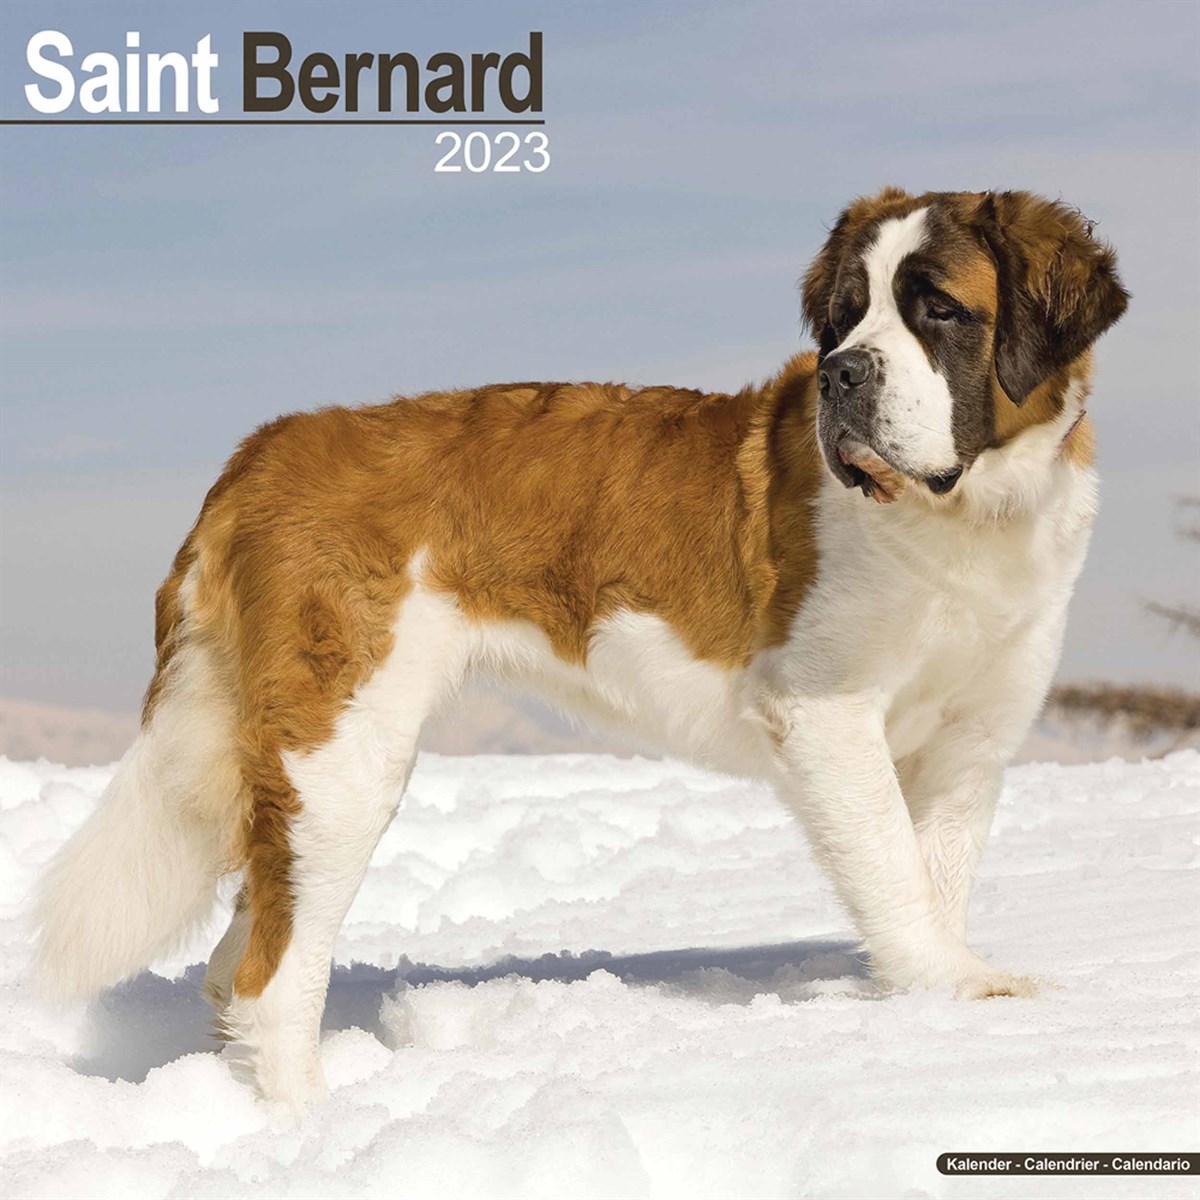 Saint Bernard 2023 Calendars